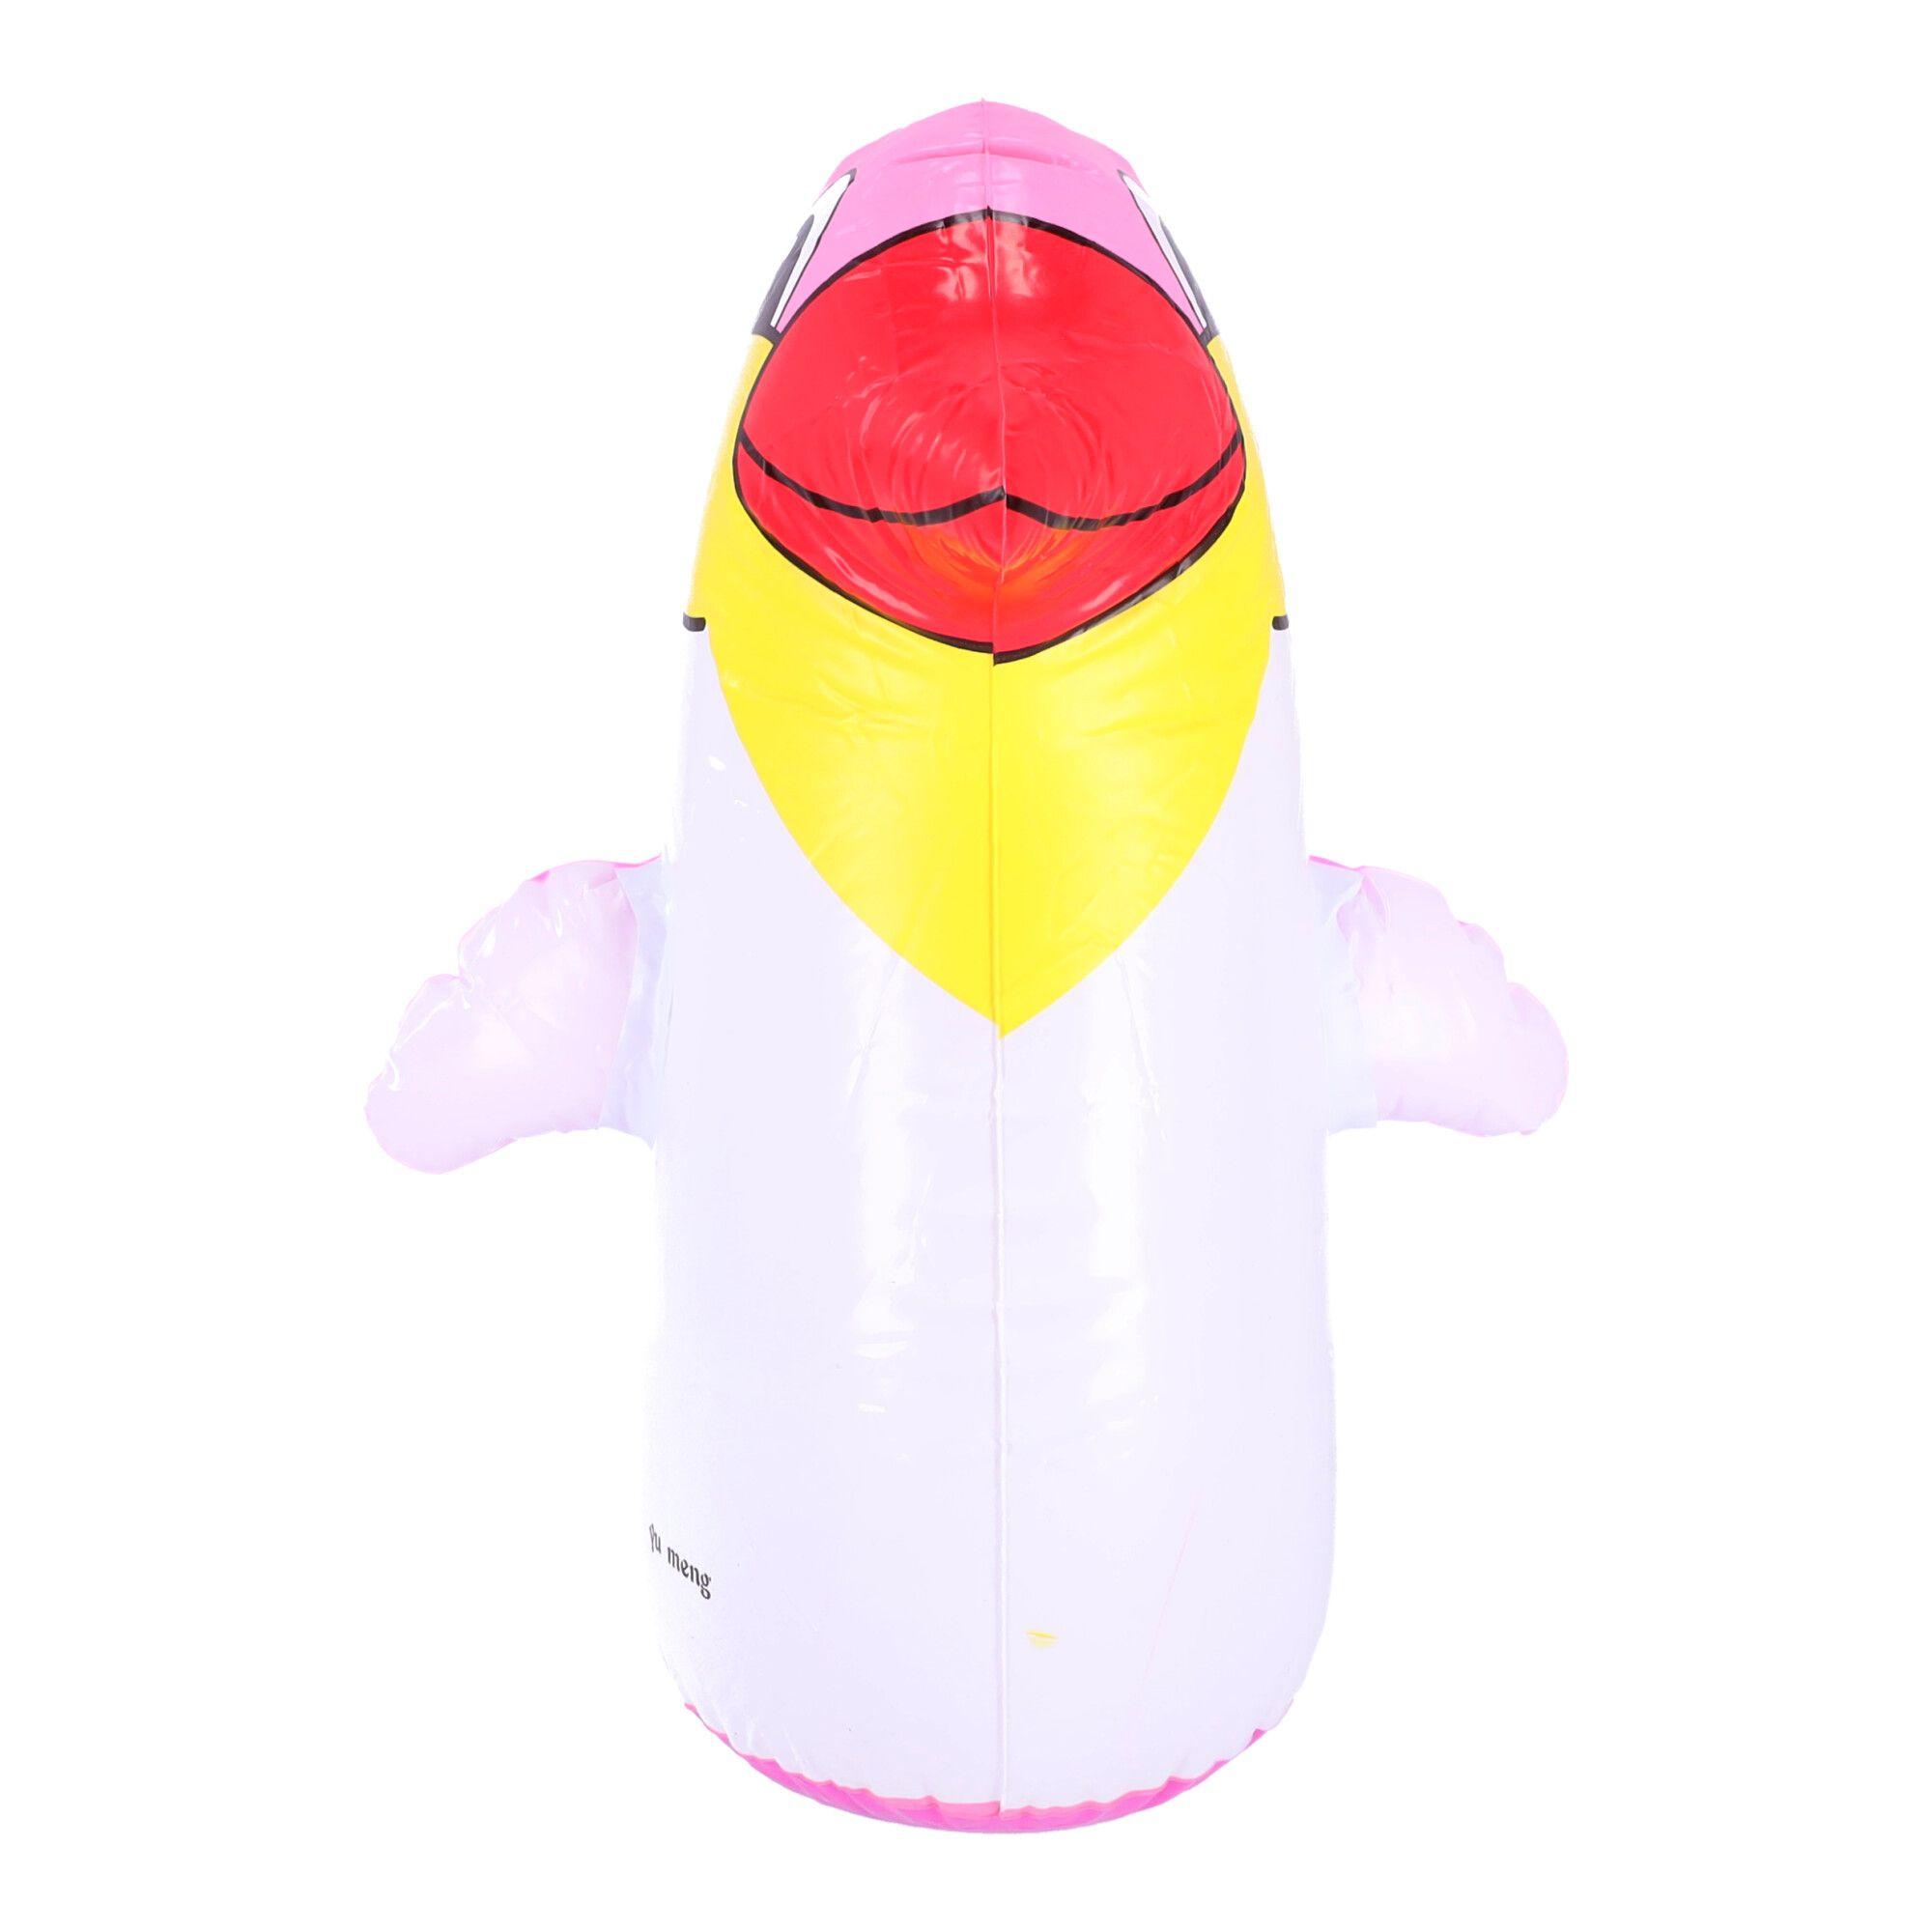 Inflatable punching bag for children, Toy for children - penguin, 36 cm.